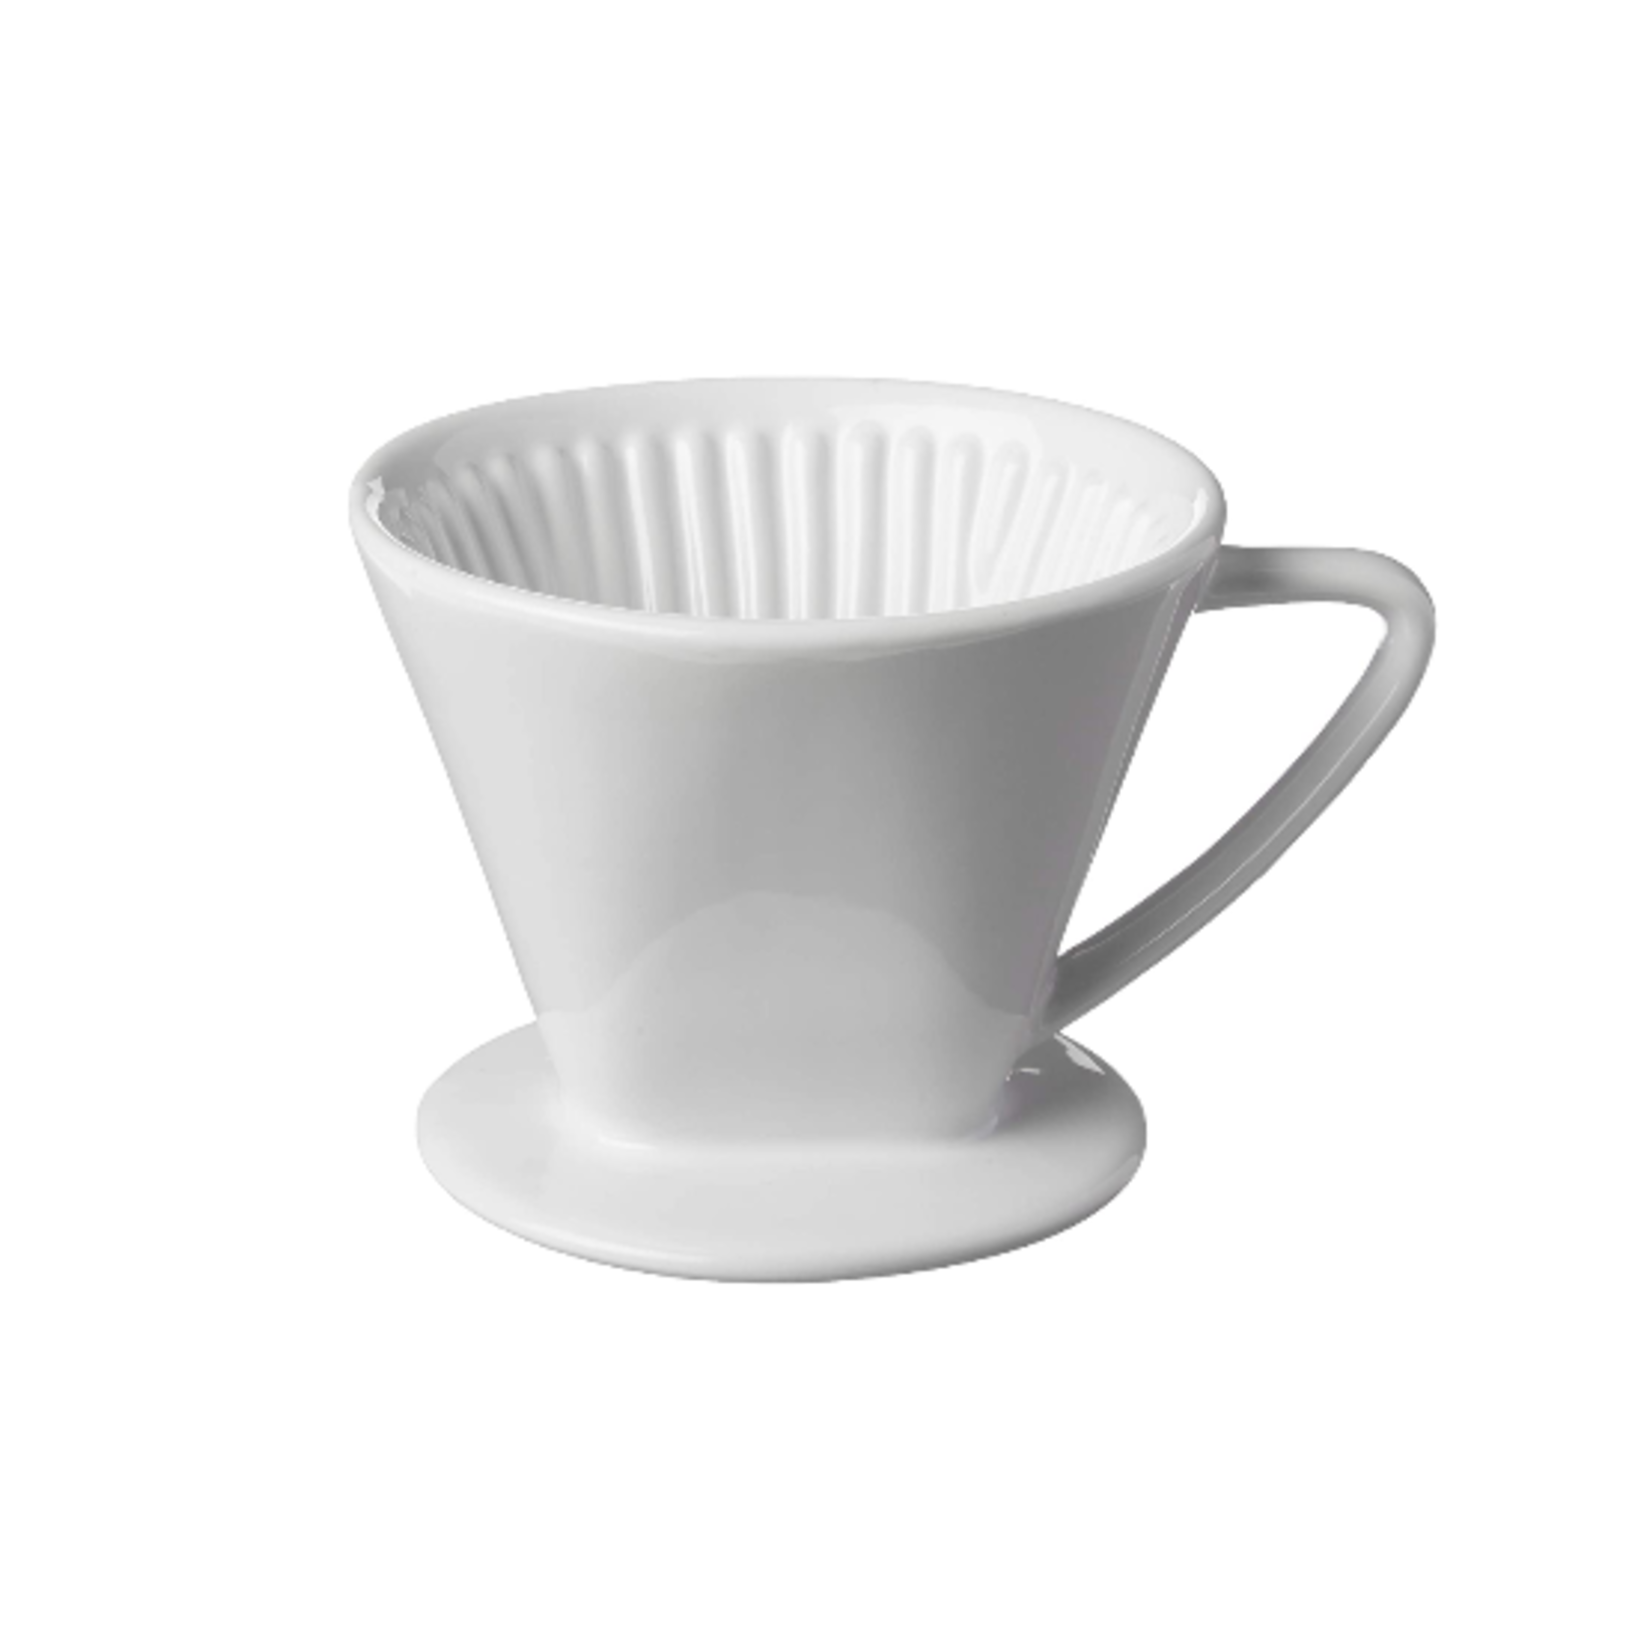 Frieling Porcelain Coffee Filter